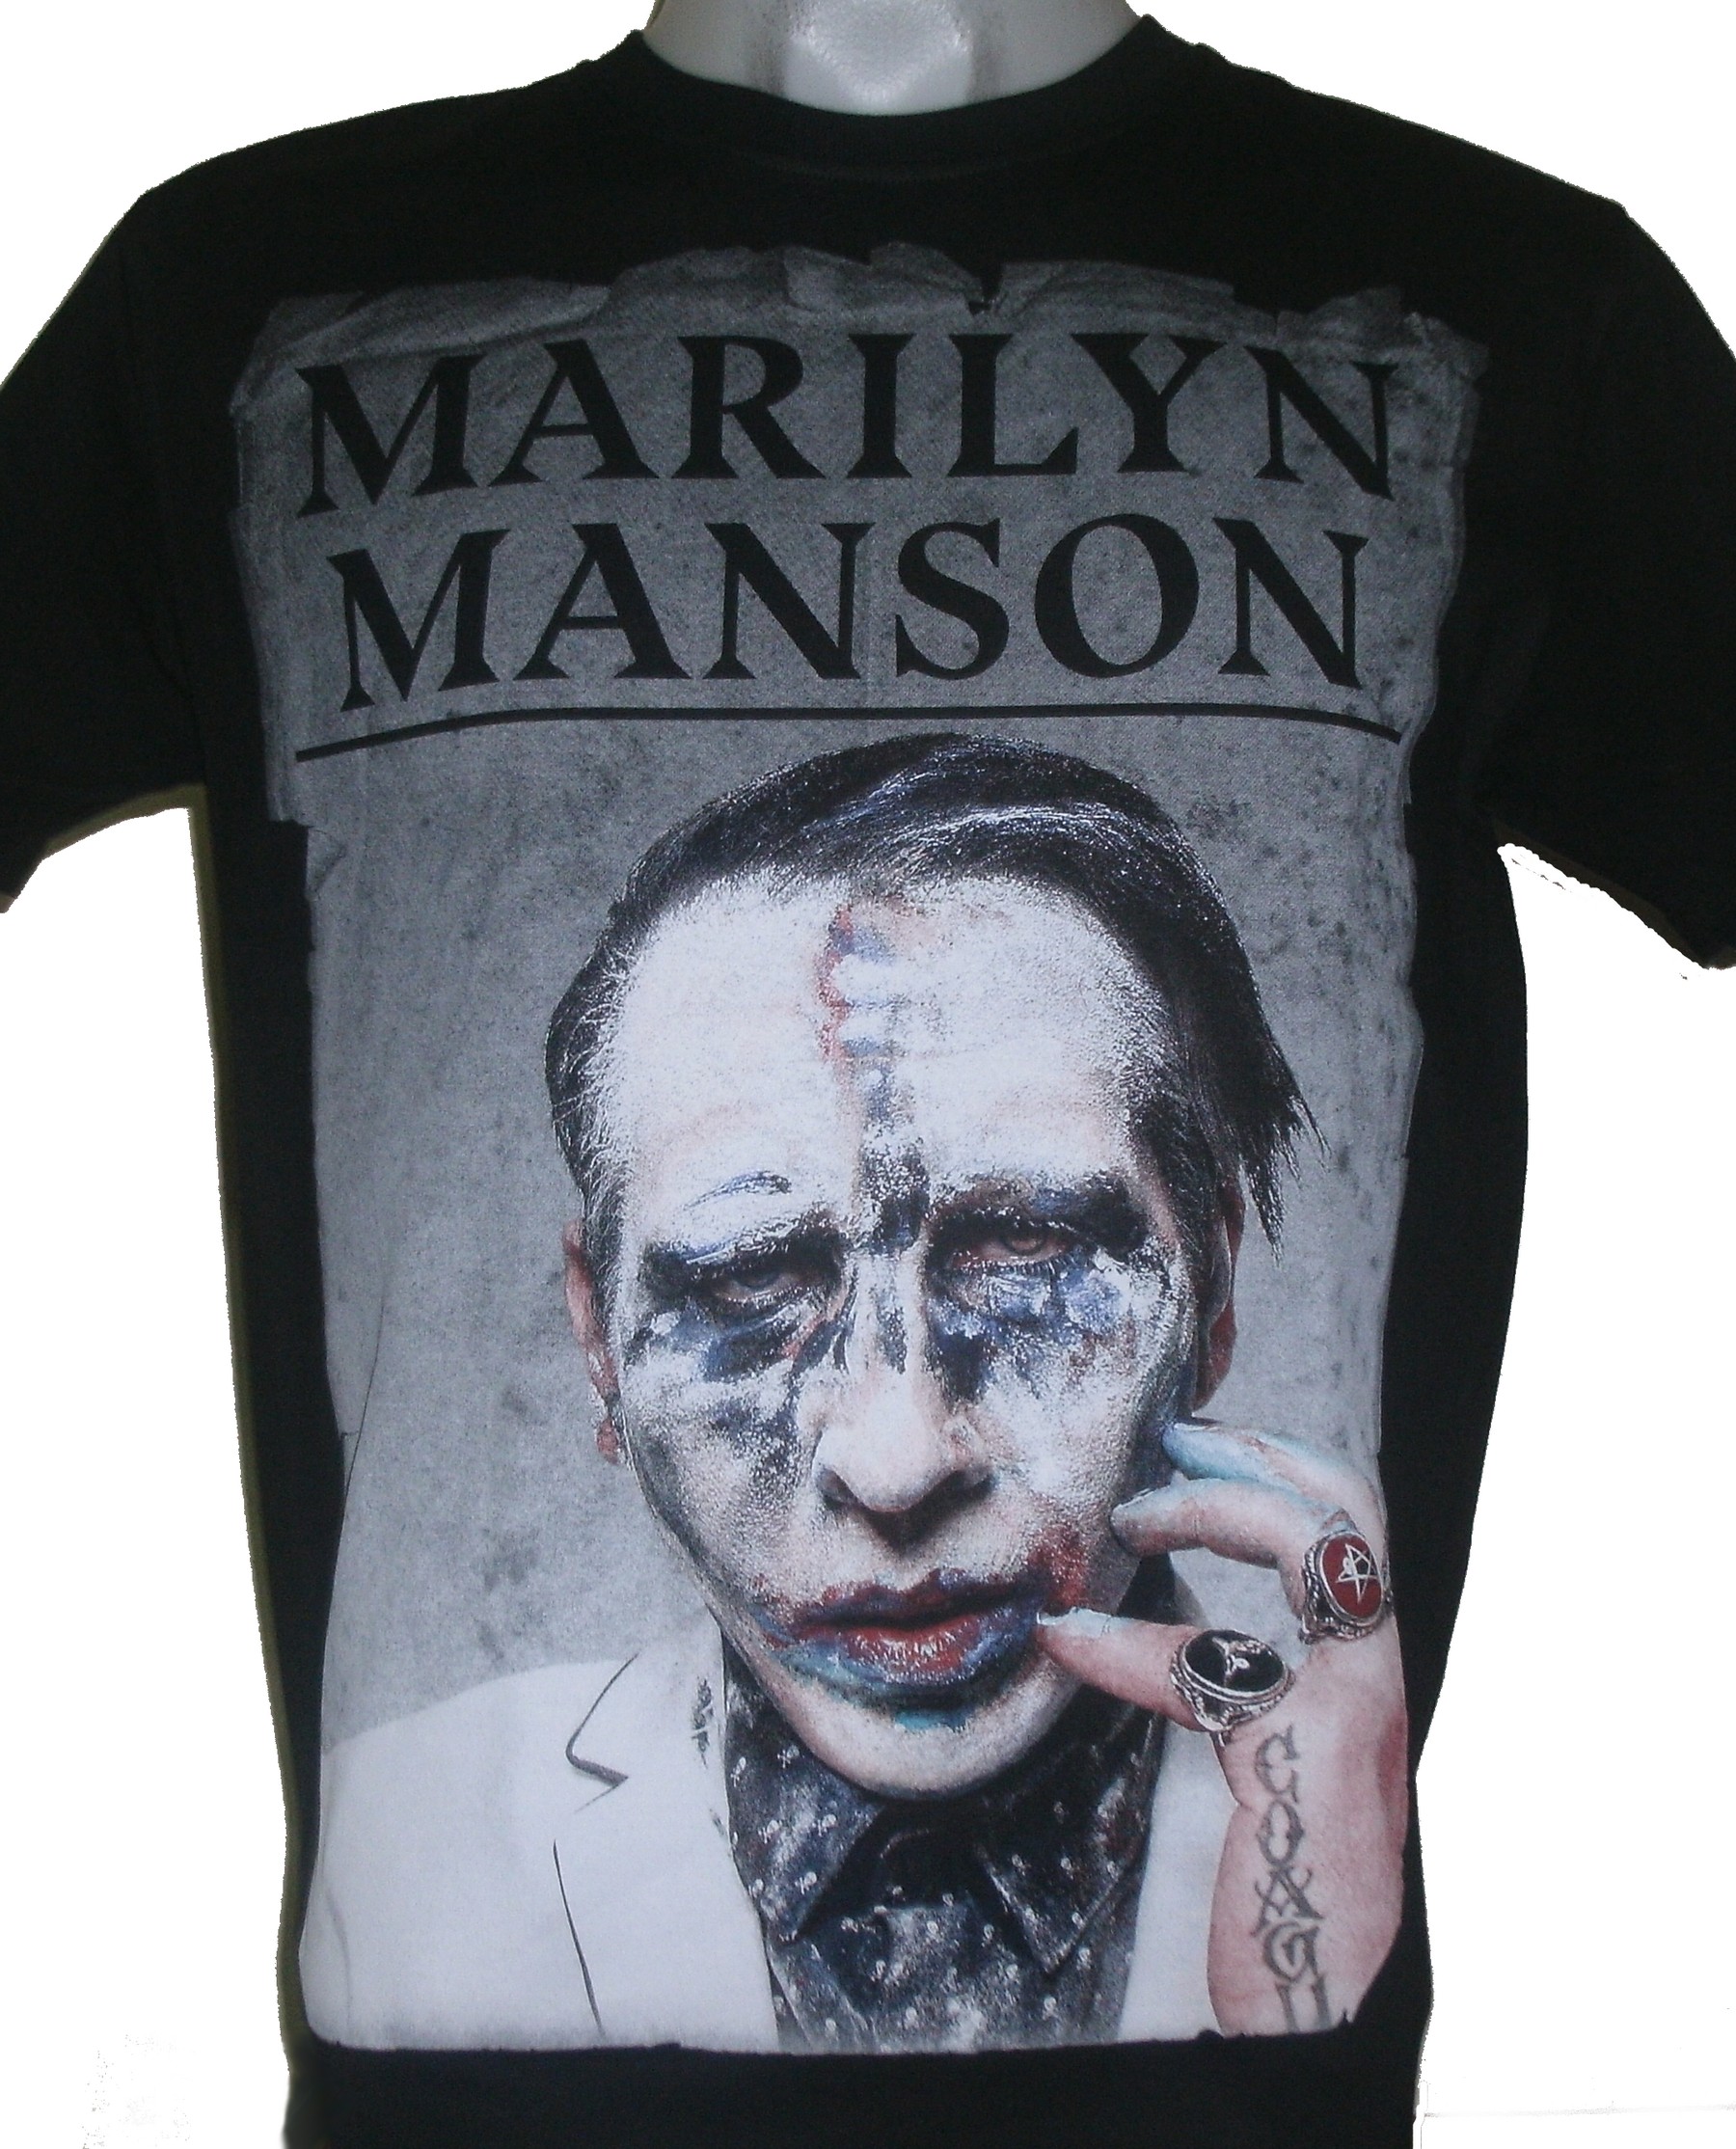 Marilyn Manson t-shirt size XXL